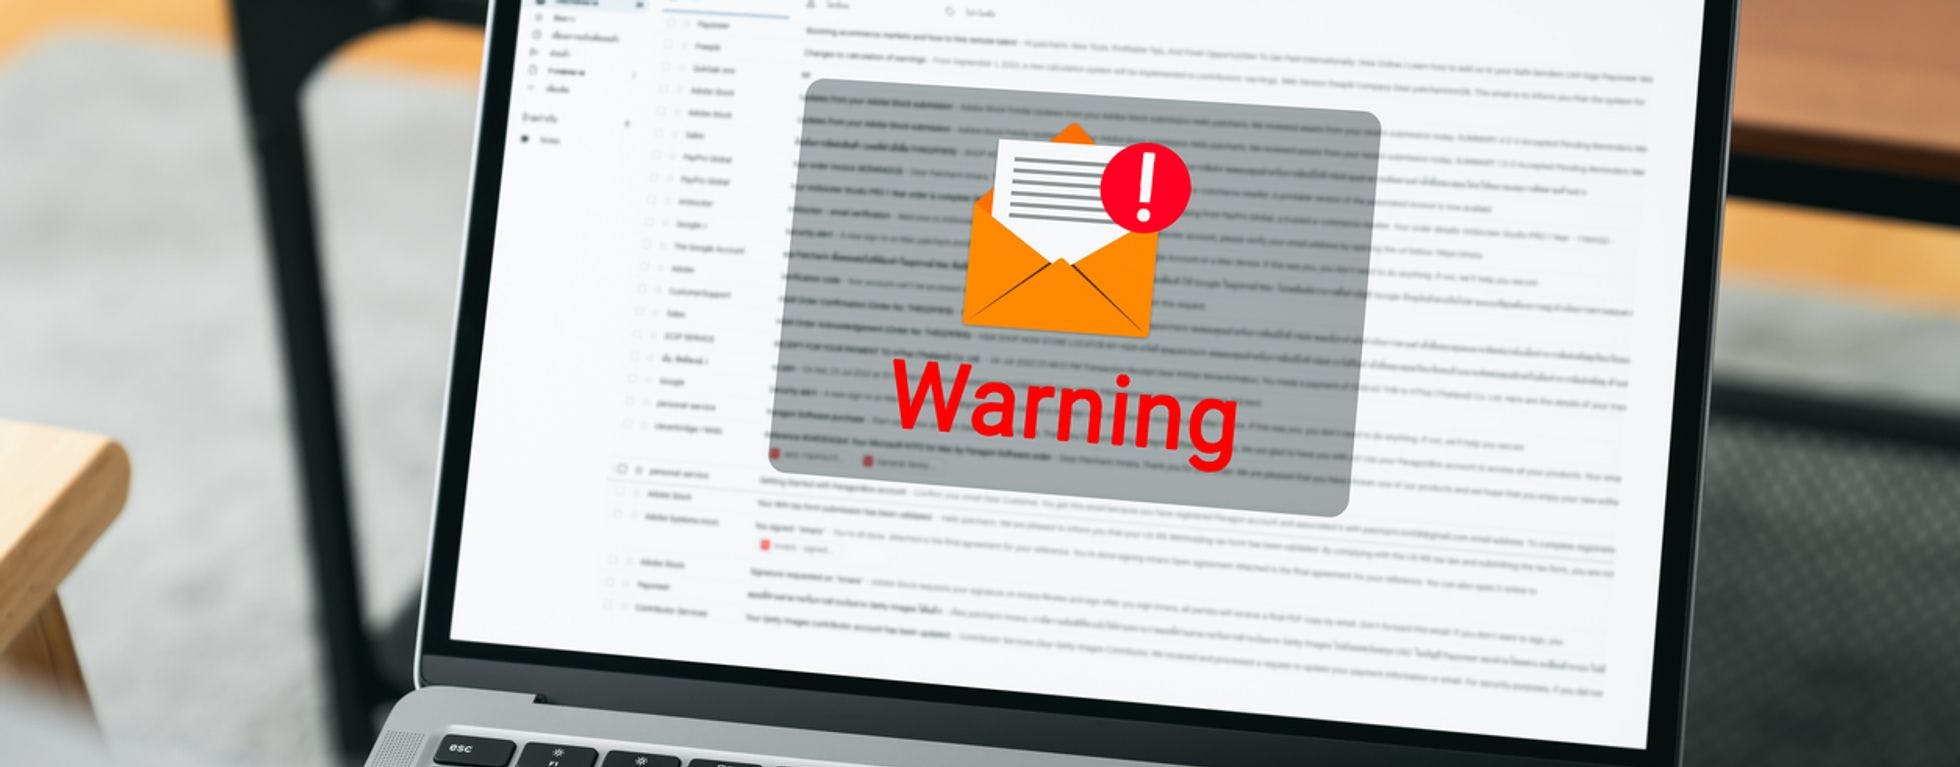 Email Scam Alert